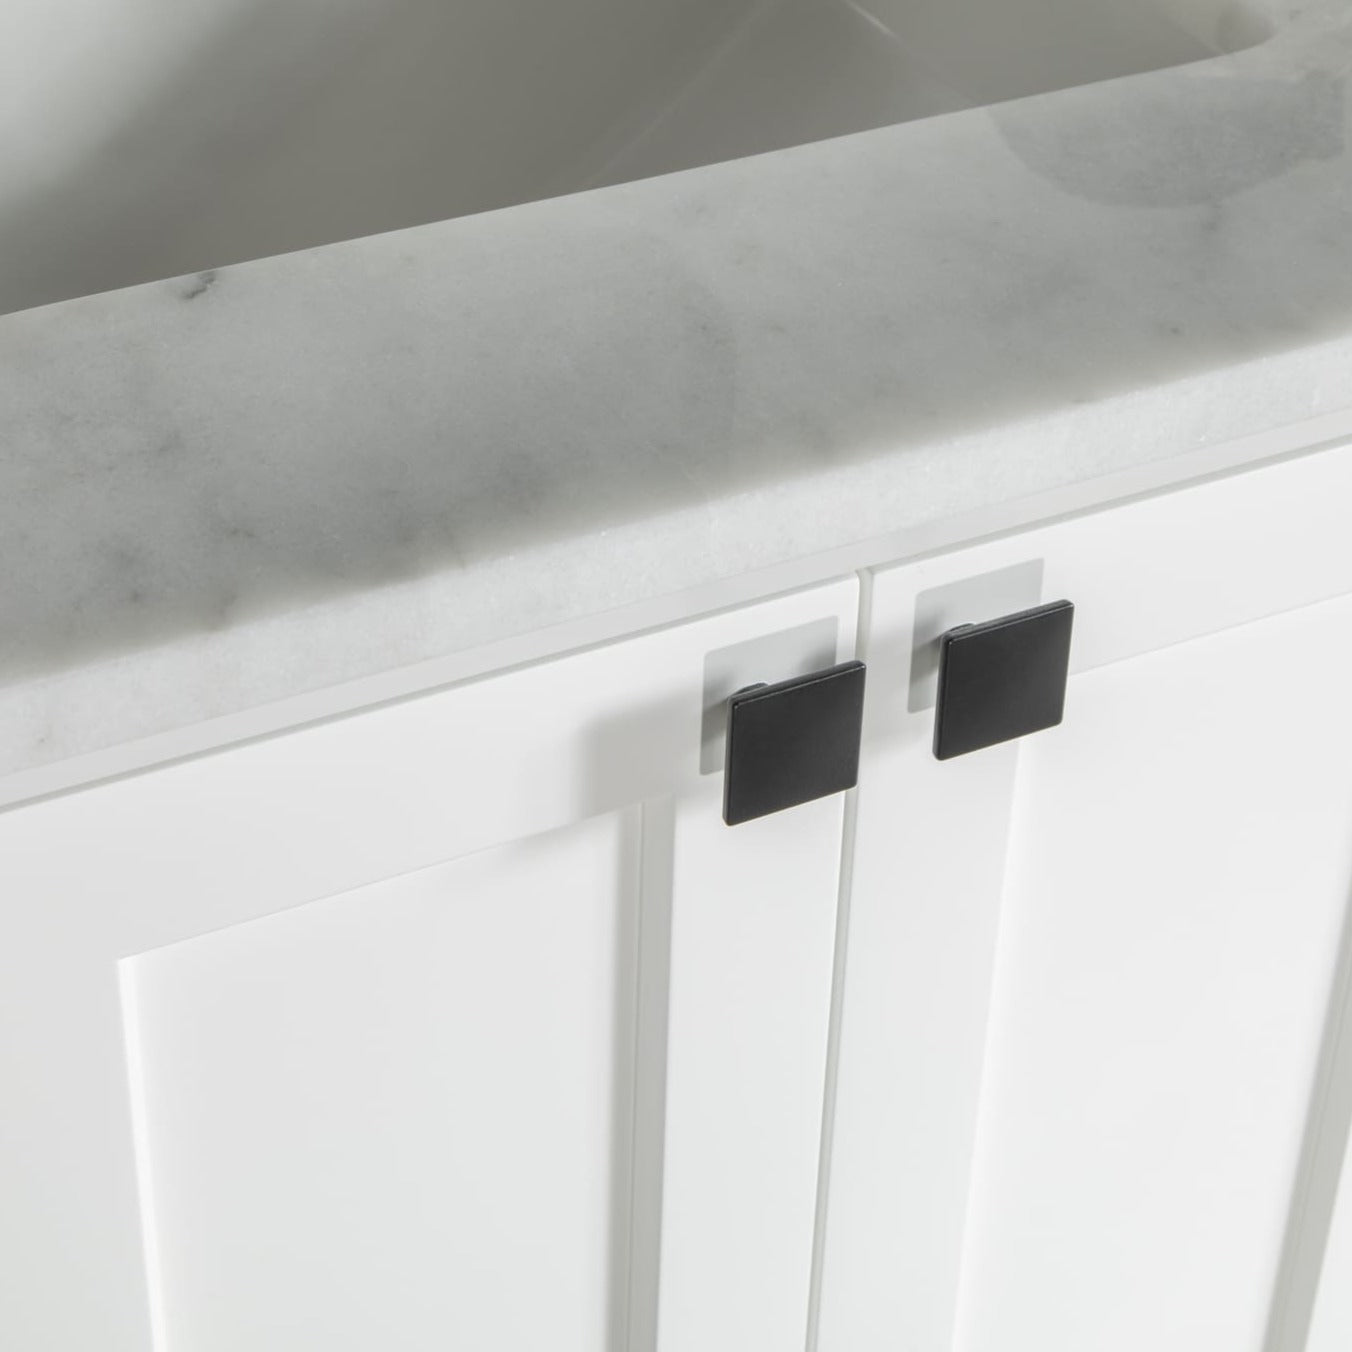 Paloma Bathroom Cabinets  Homelero 42"  #size_42"  #color_white #hardware_black